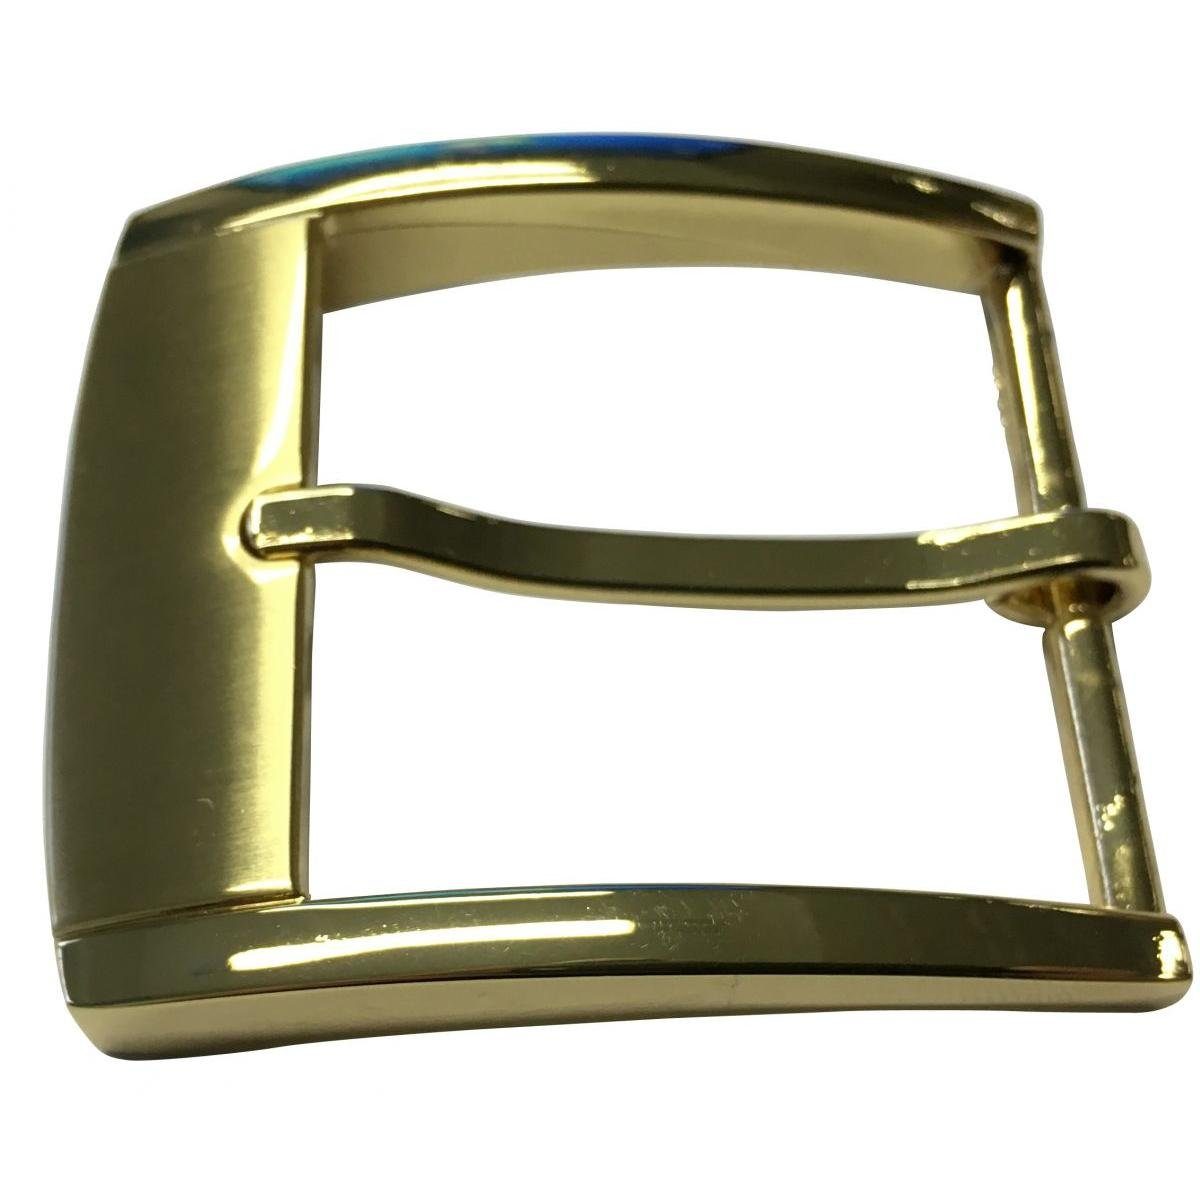 BELTINGER Gürtelschnalle 4,0 cm - Wechselschließe Gürtelschließe 40mm - Dorn-Schließe - Gürtel Gold